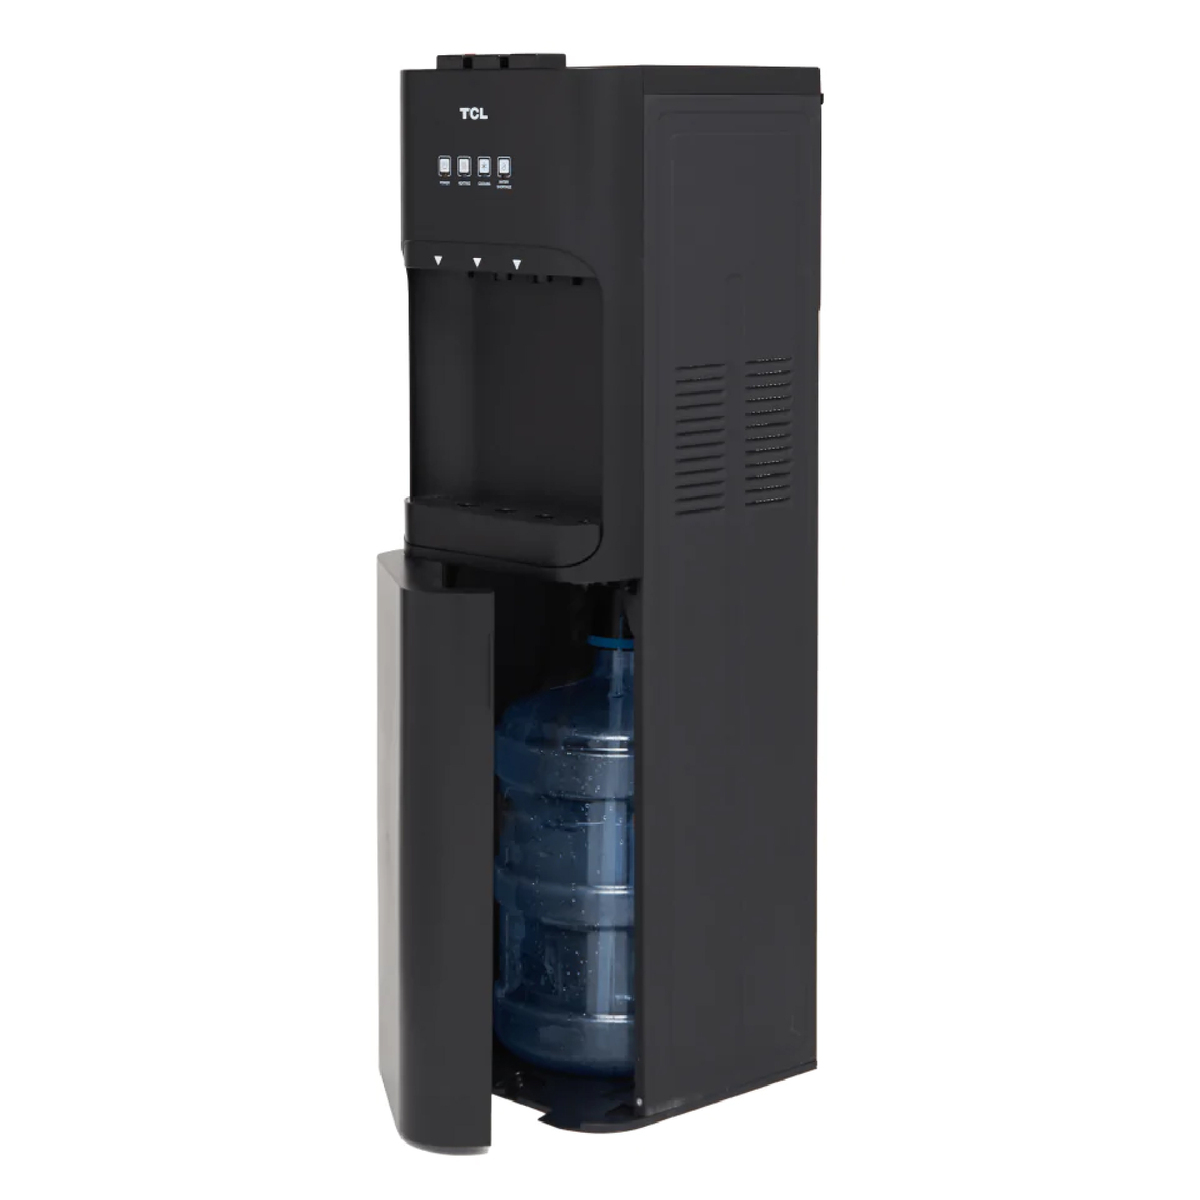 TCL Stainless Steel Bottom Loading 3 Tap Water Dispenser, Black, TY-LWYR91T